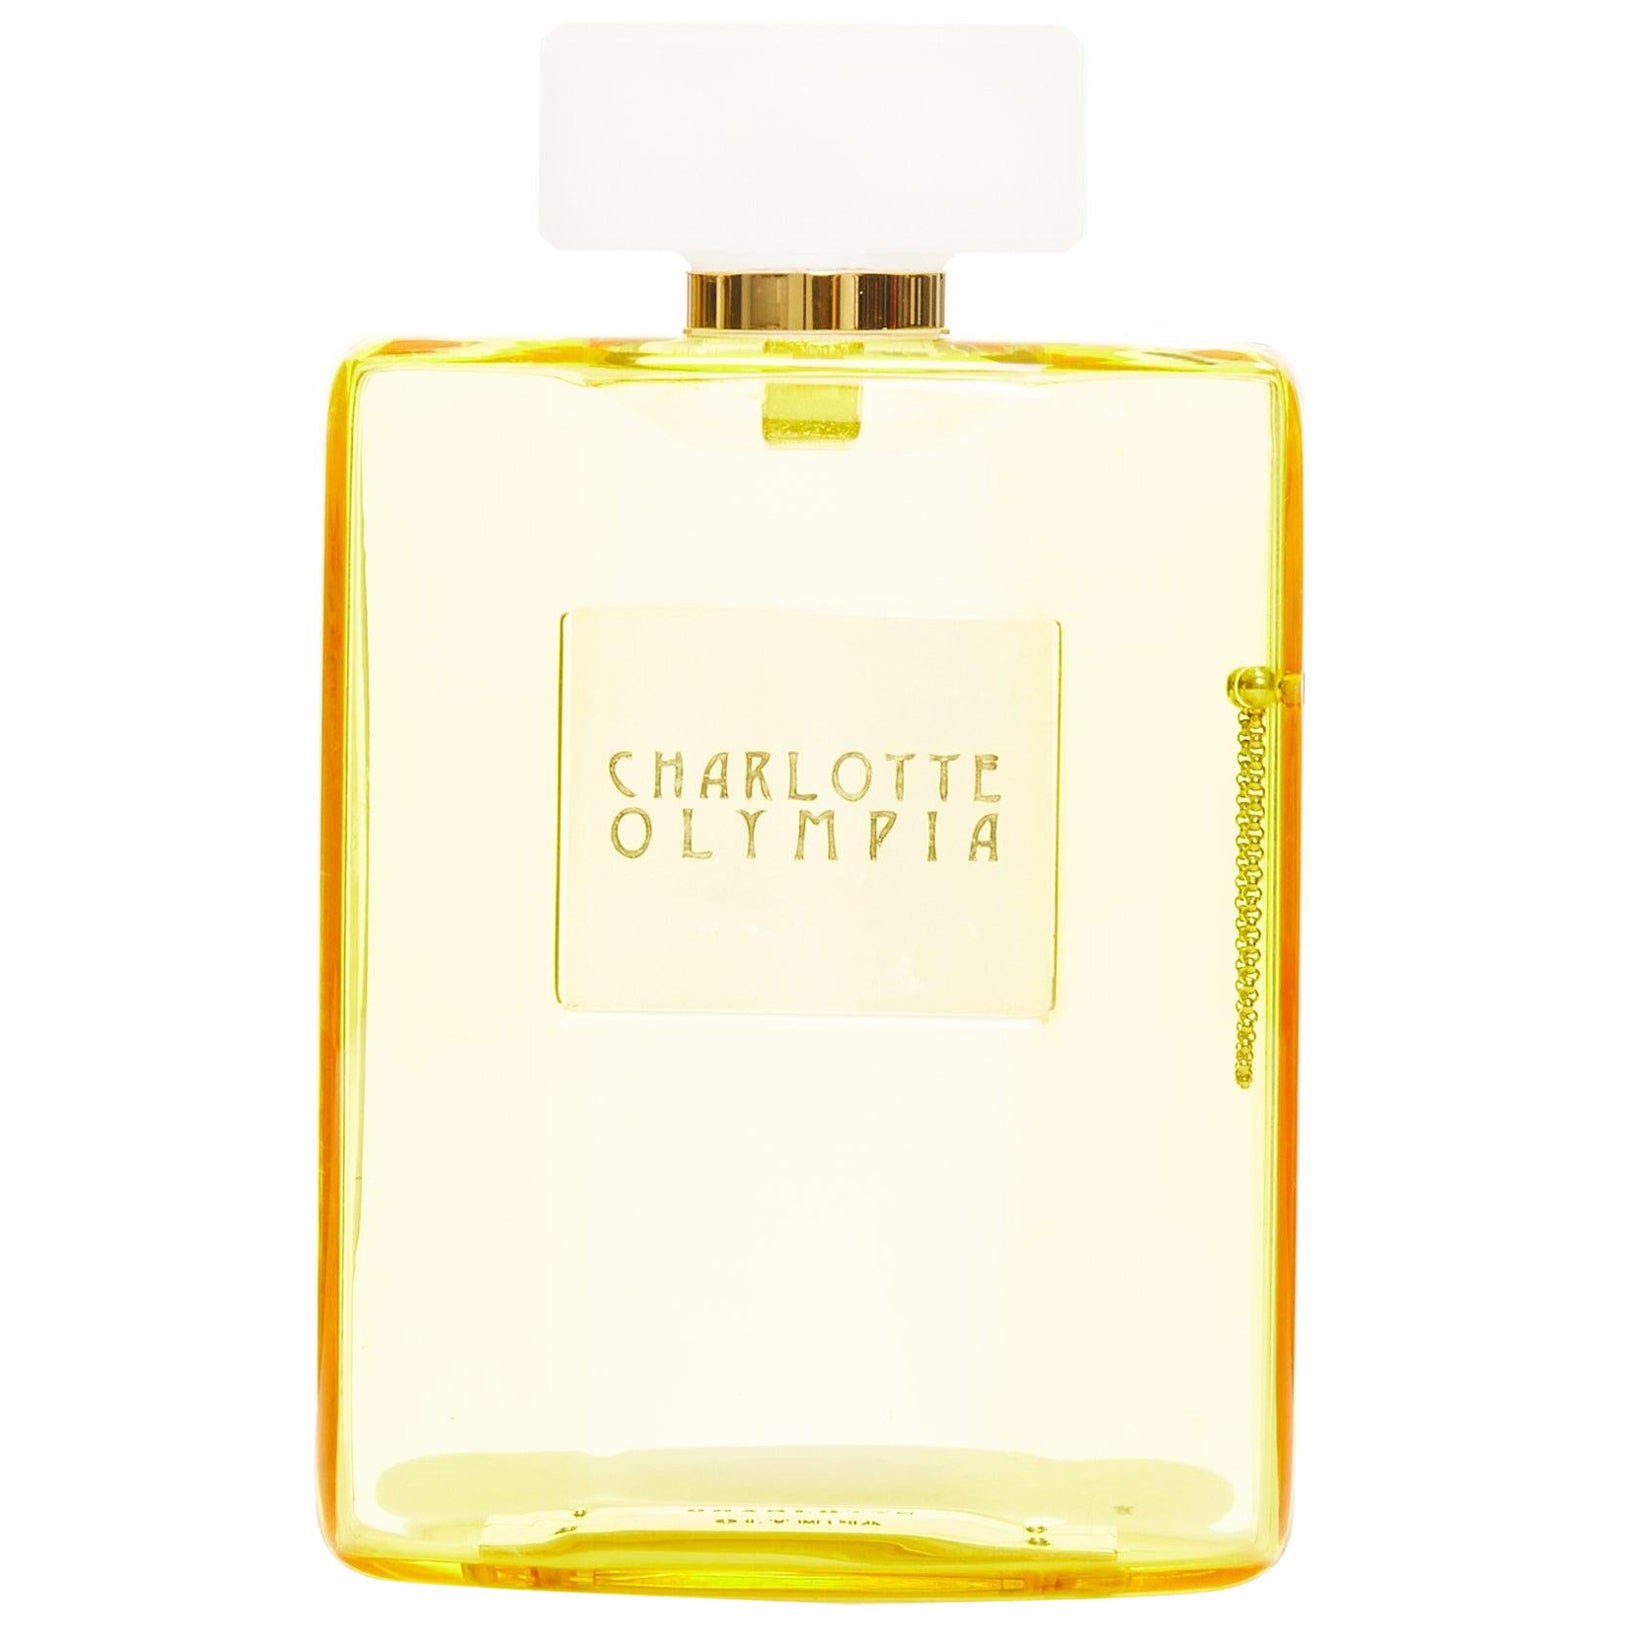 rare CHARLOTTE OLYMPIA yellow acrylic logo perfume bottle box clutch bag For Sale